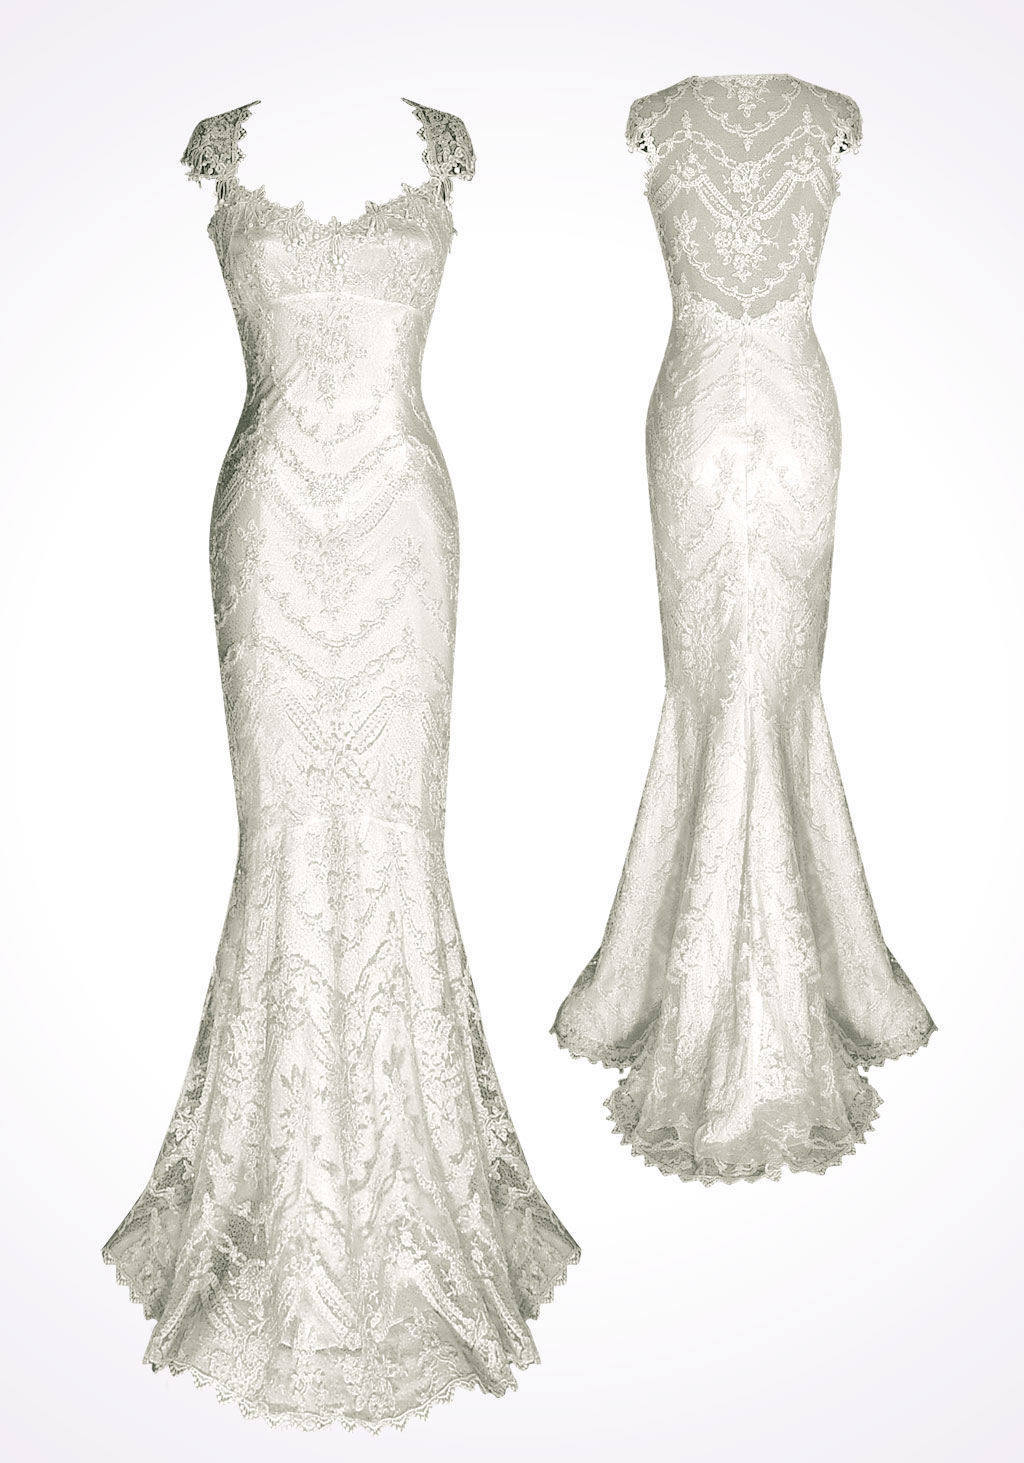 Claire Pettibone's Chantilly Wedding Dress